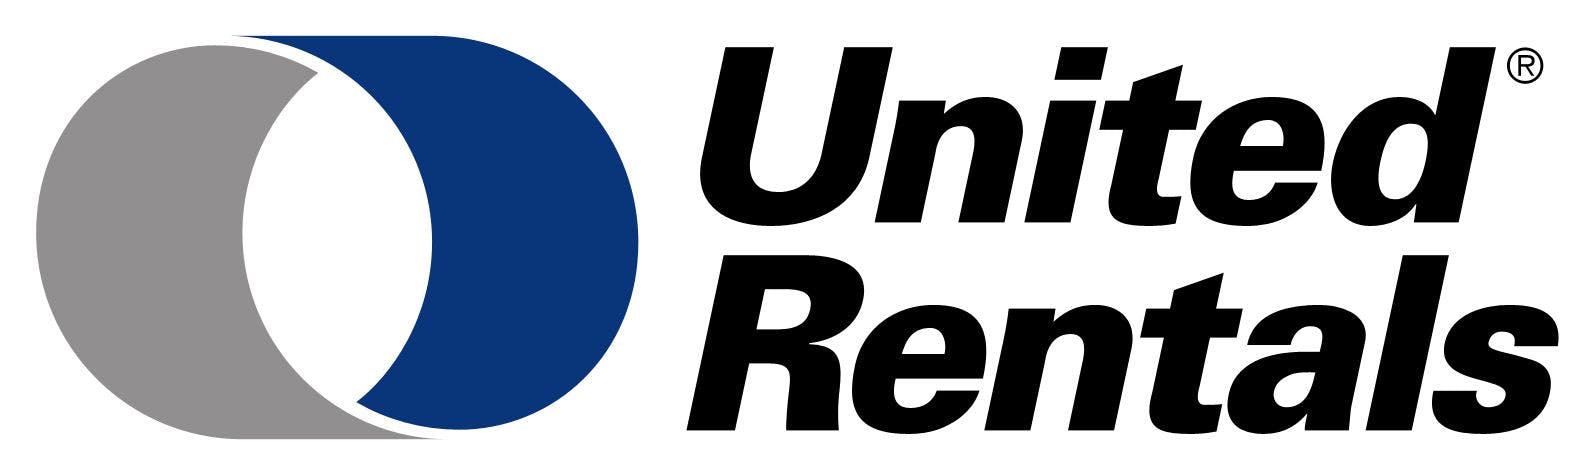 United logo.jpg